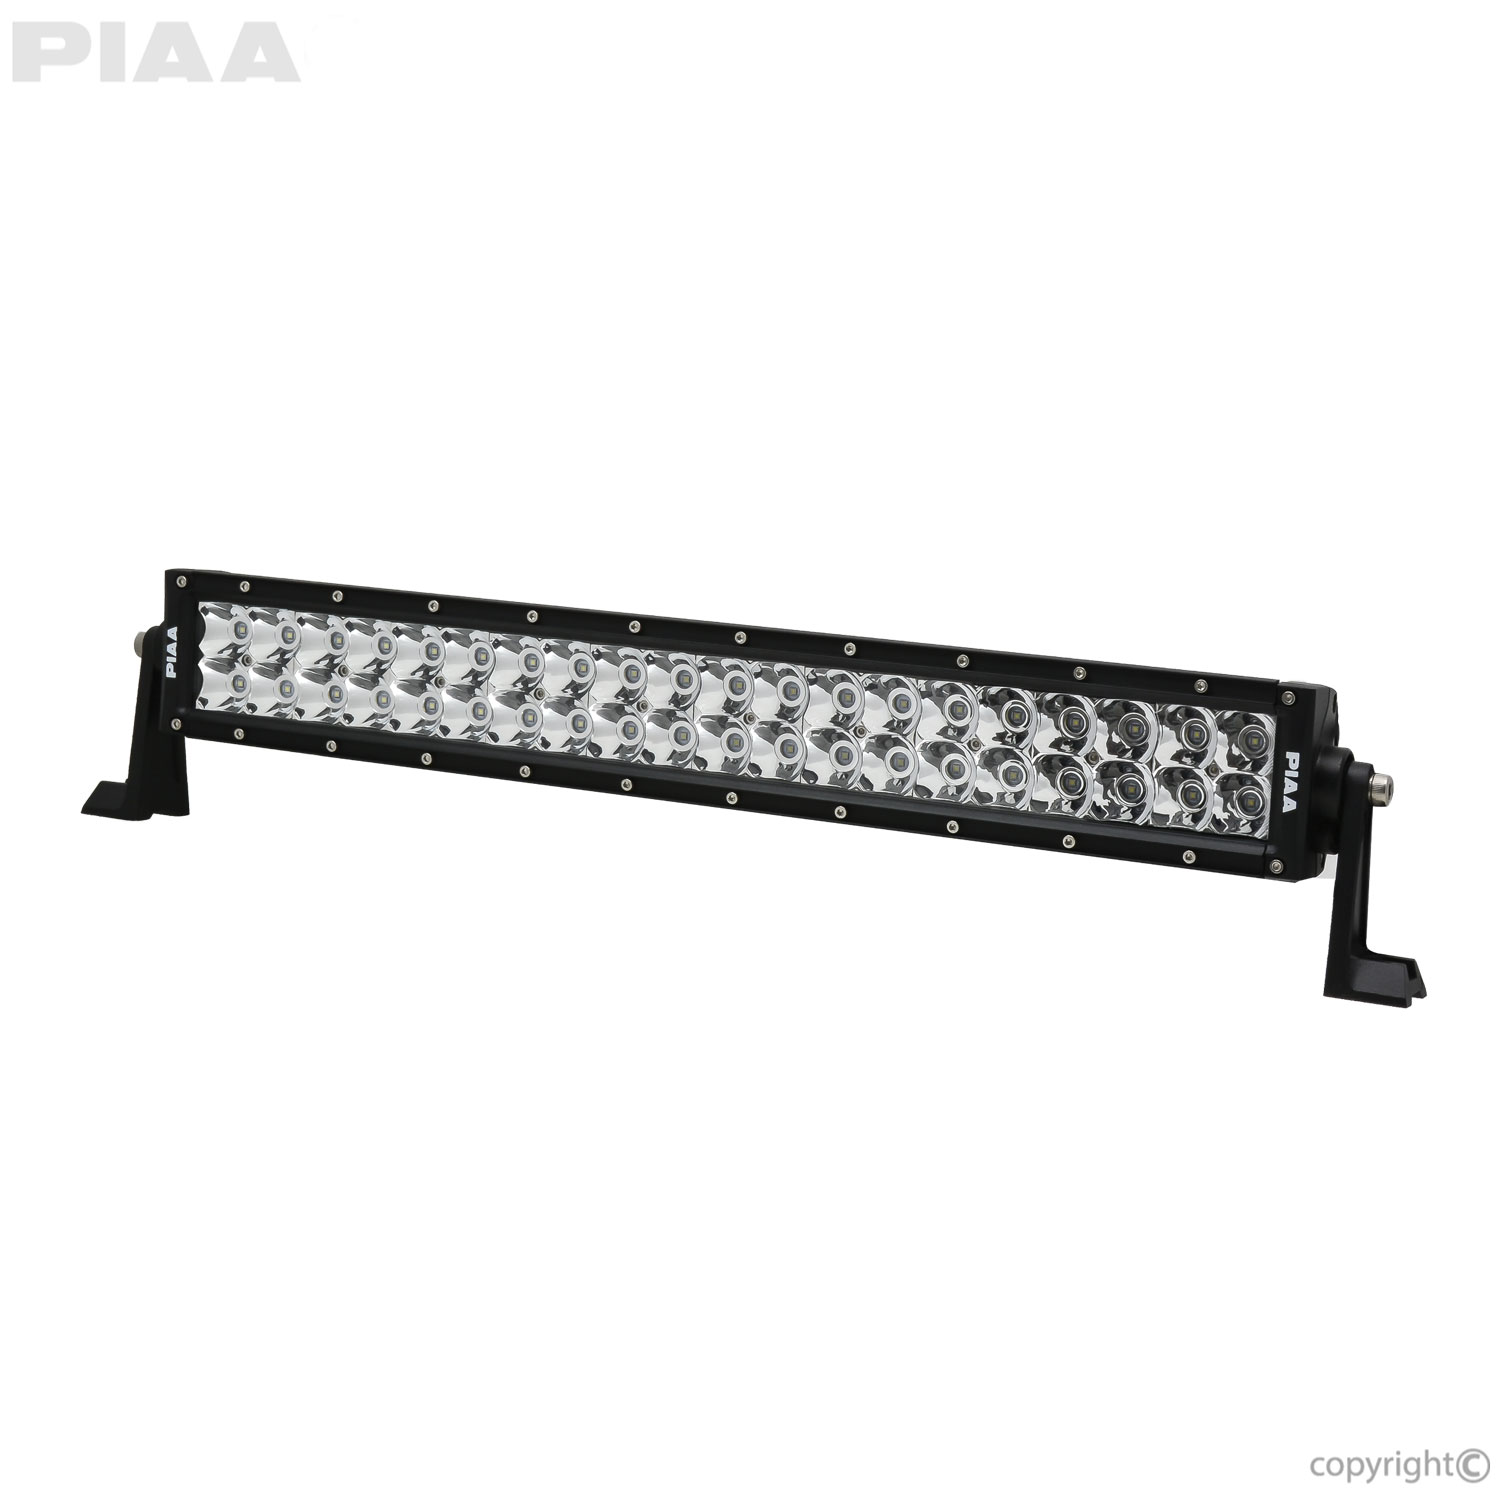 PIAA  Quad Series 20 Dual Row LED Light Bar #Q20